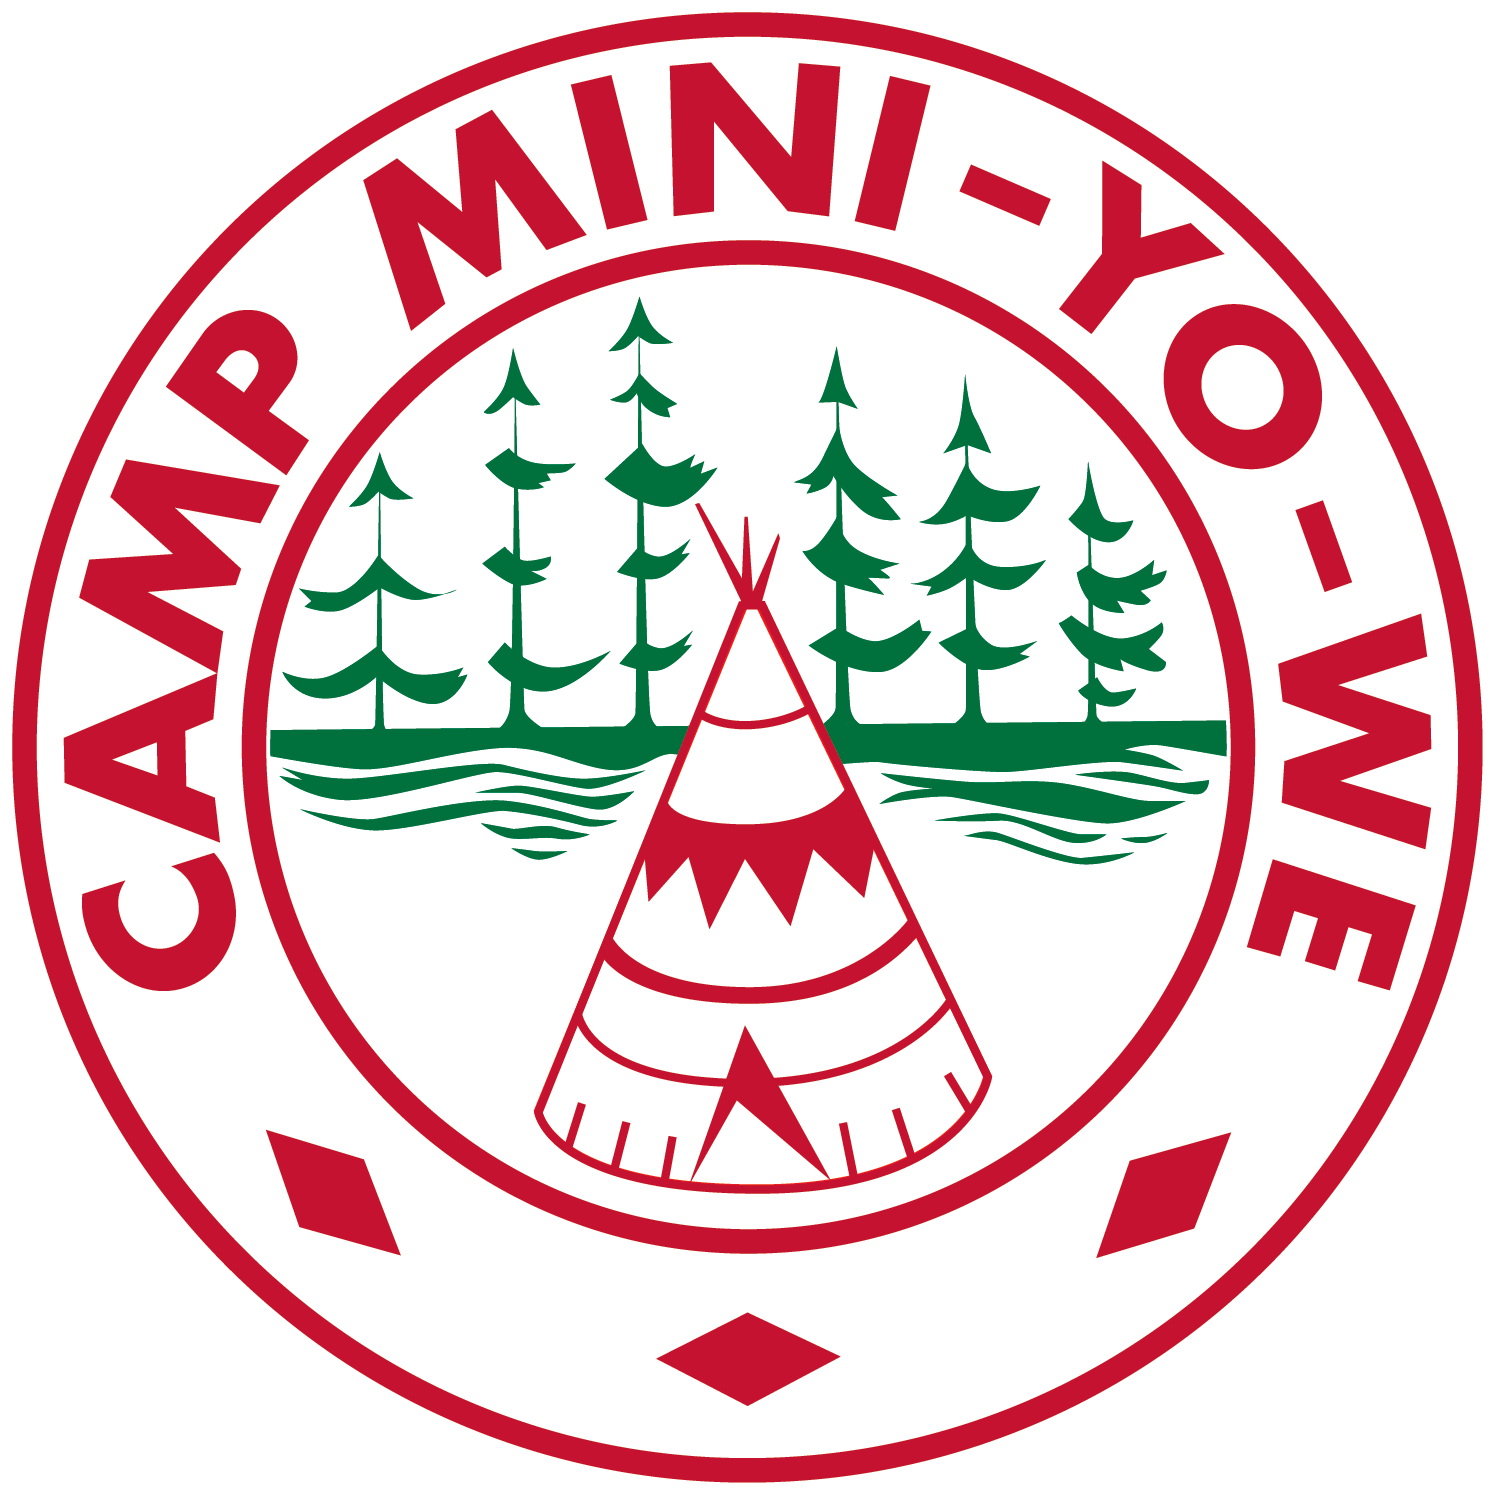 Camp Mini-Yo-We